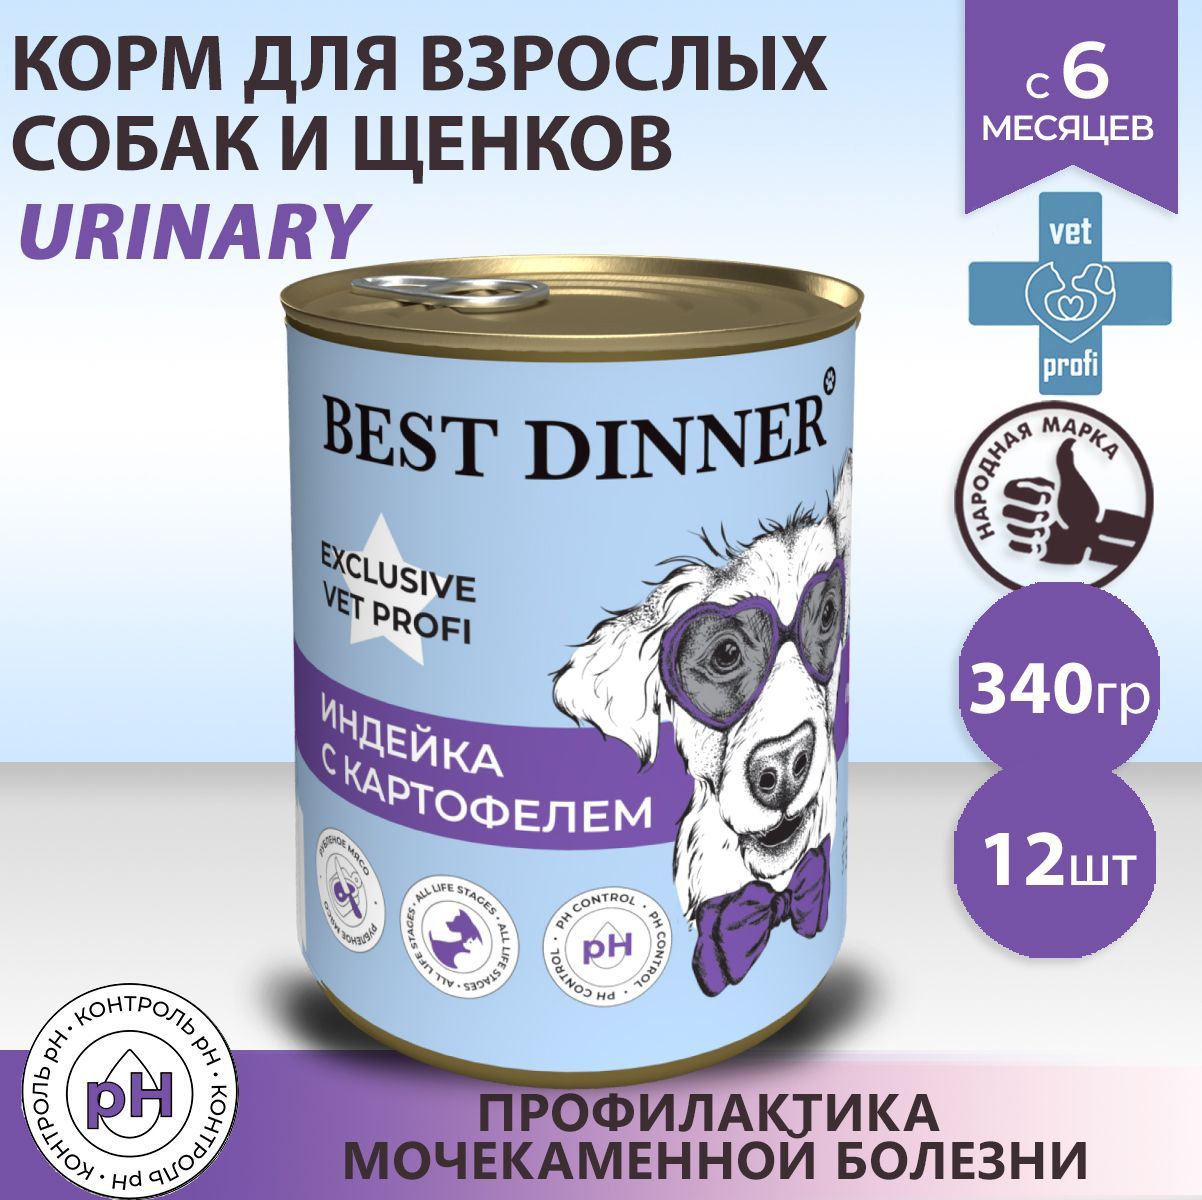 Бест Диннер Уринари. Best dinner Urinary влажный. Best dinner конс.д/кошек Exclusive Urinary vet Profi цыплёнок/телятина/клюква 100гр. Корм бест для собак отзывы